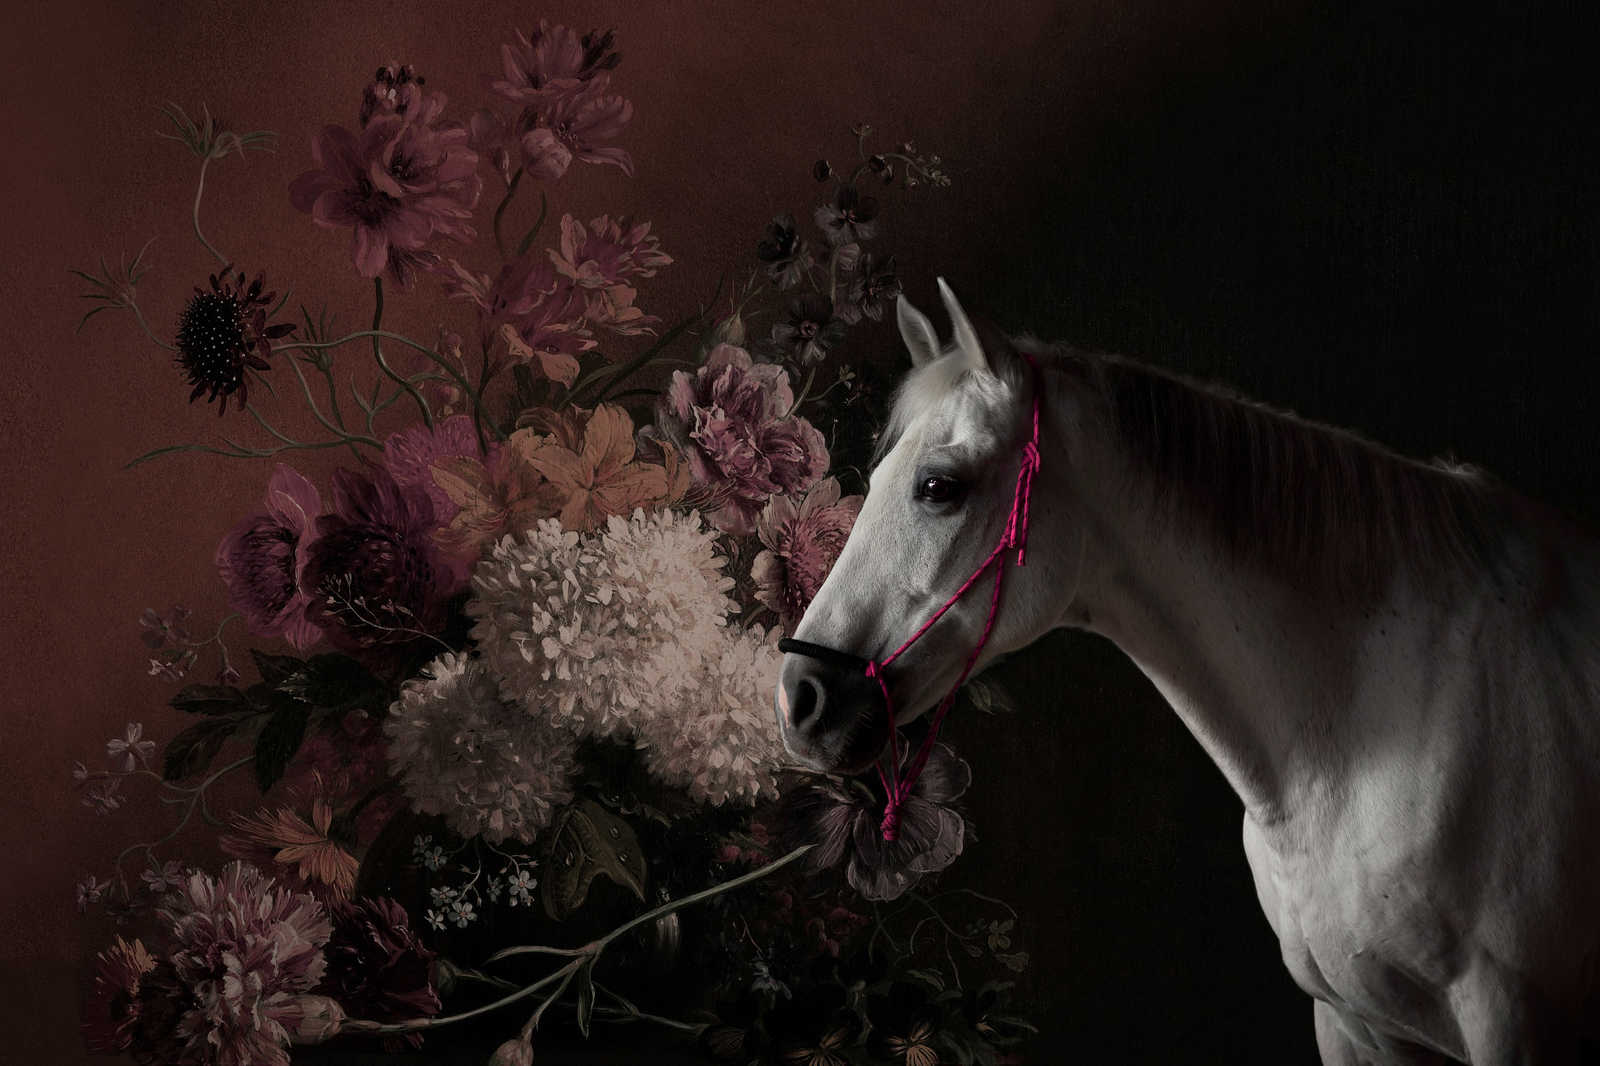             Canvas painting Horses Portrait with Flowers - 0,90 m x 0,60 m
        